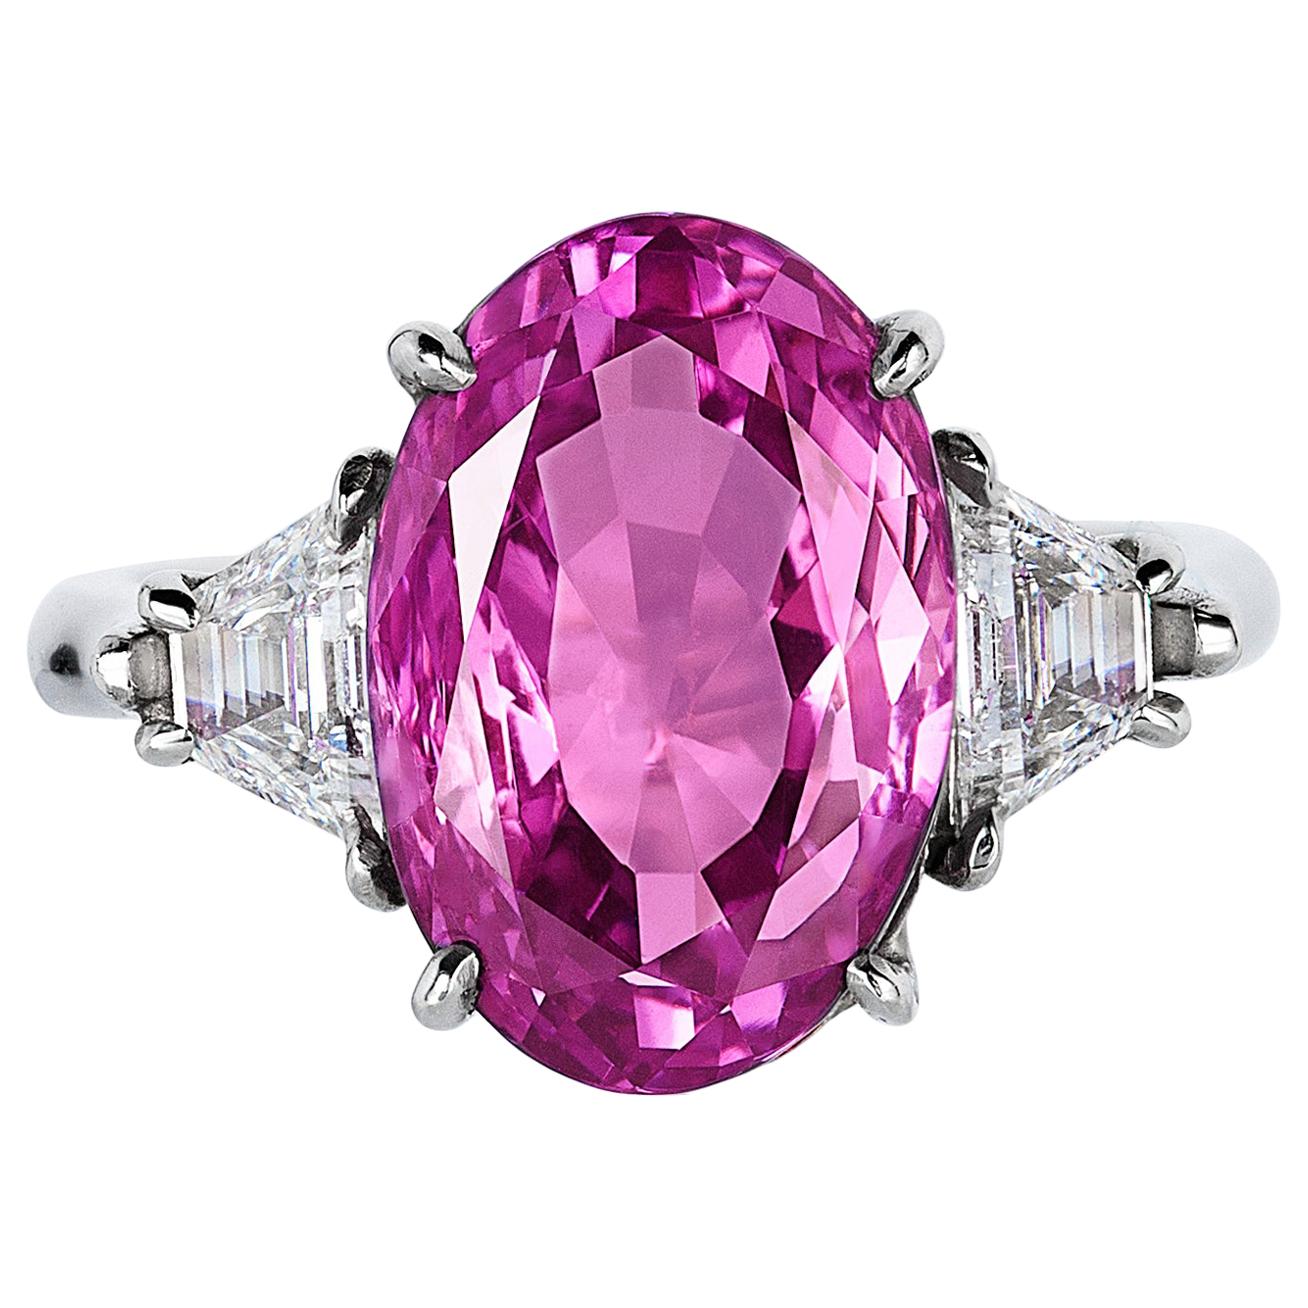 Andreoli GIA Certified 9.39 Carat Pink Sapphire Diamond Platinum Ring